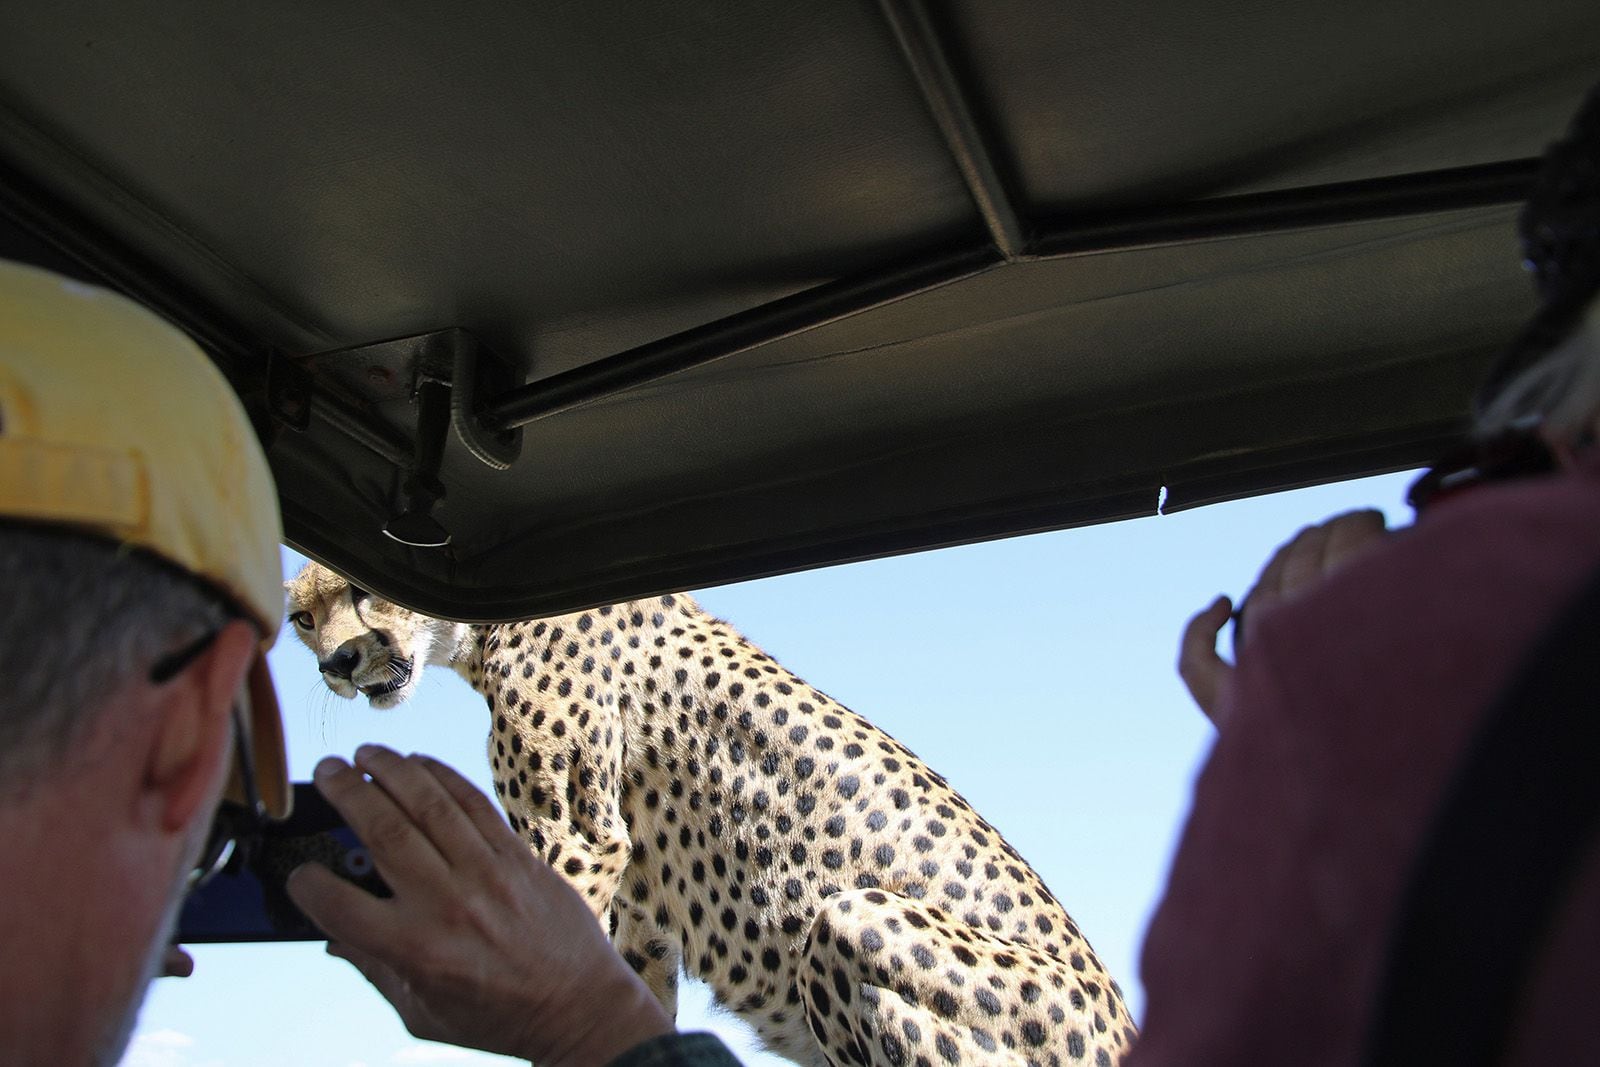 With just air between them, a cheetah eyeballs passengers after jumping onto their safari jeep in Serengeti National Park in Tanzania.